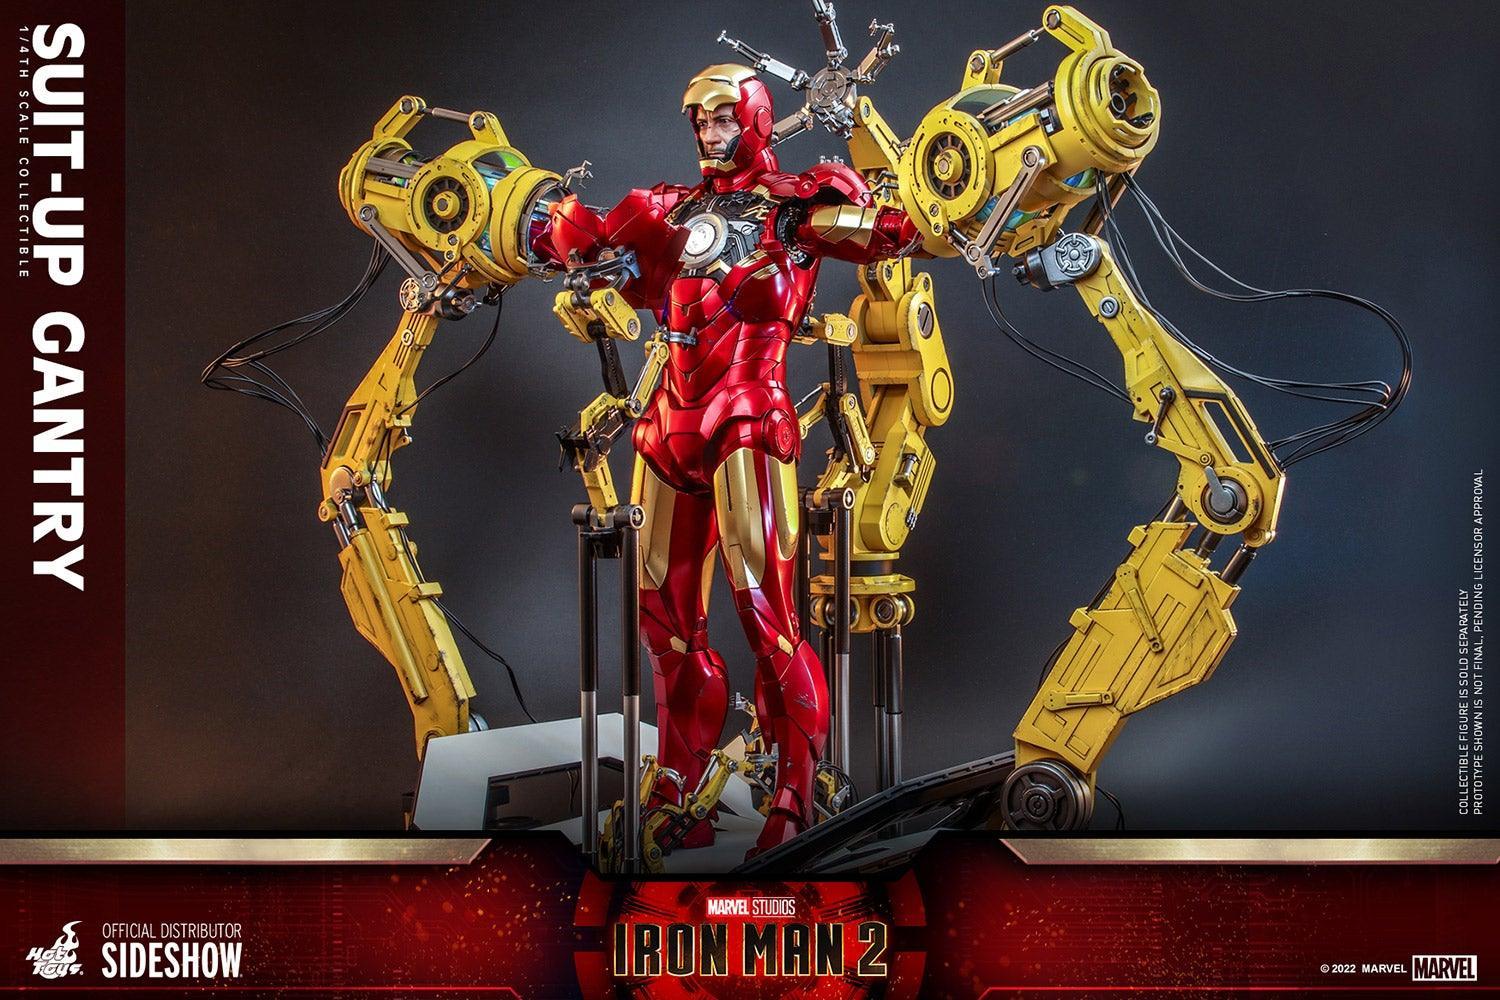 HOTACS012 Iron Man 2 - Gantry 1:4 Scale Action Figure Accessory - Hot Toys - Titan Pop Culture